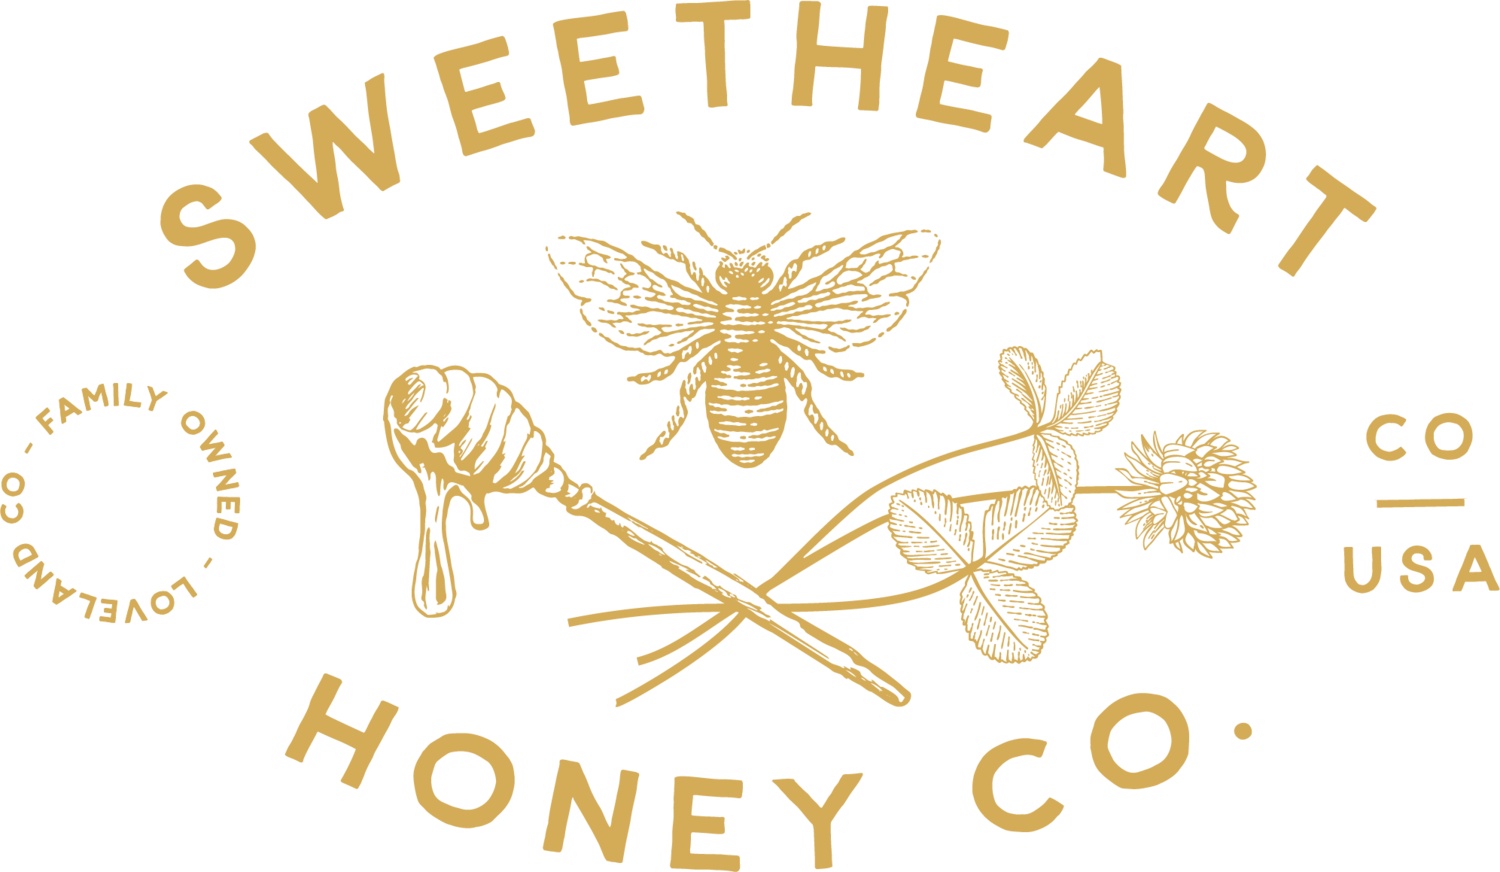 Sweetheart Honey CO